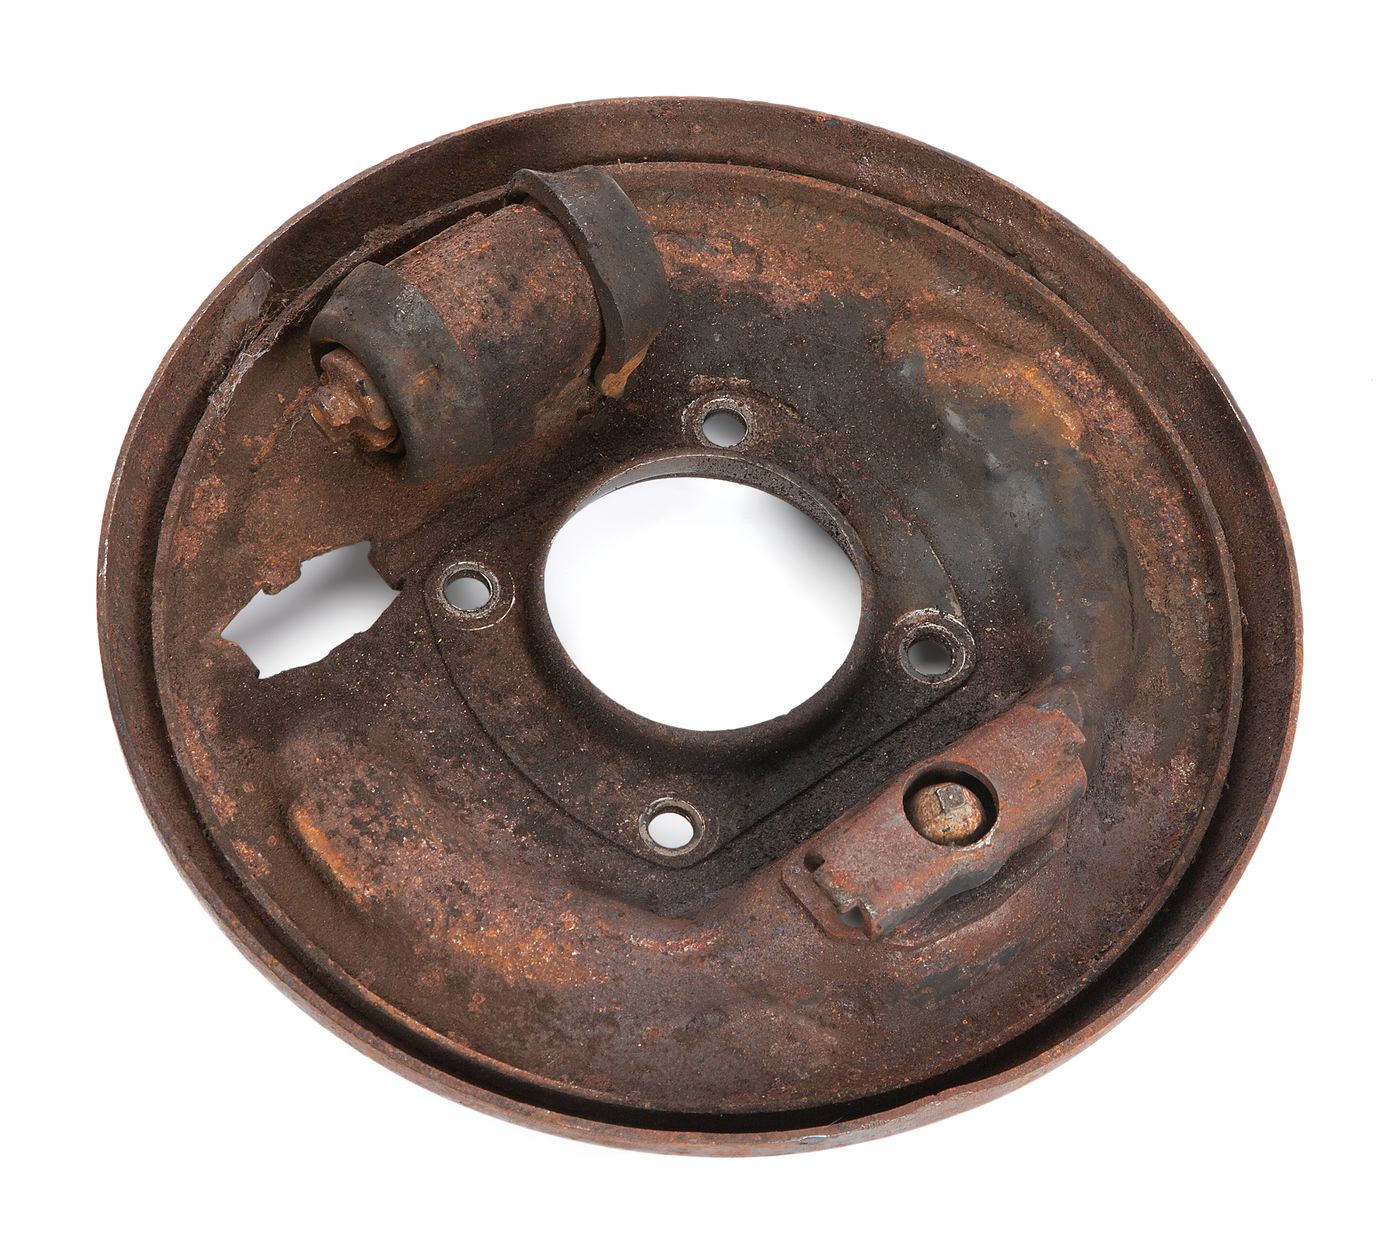 Bremsankerplatte
Brake anchor plate
Plaque de fixation des frein